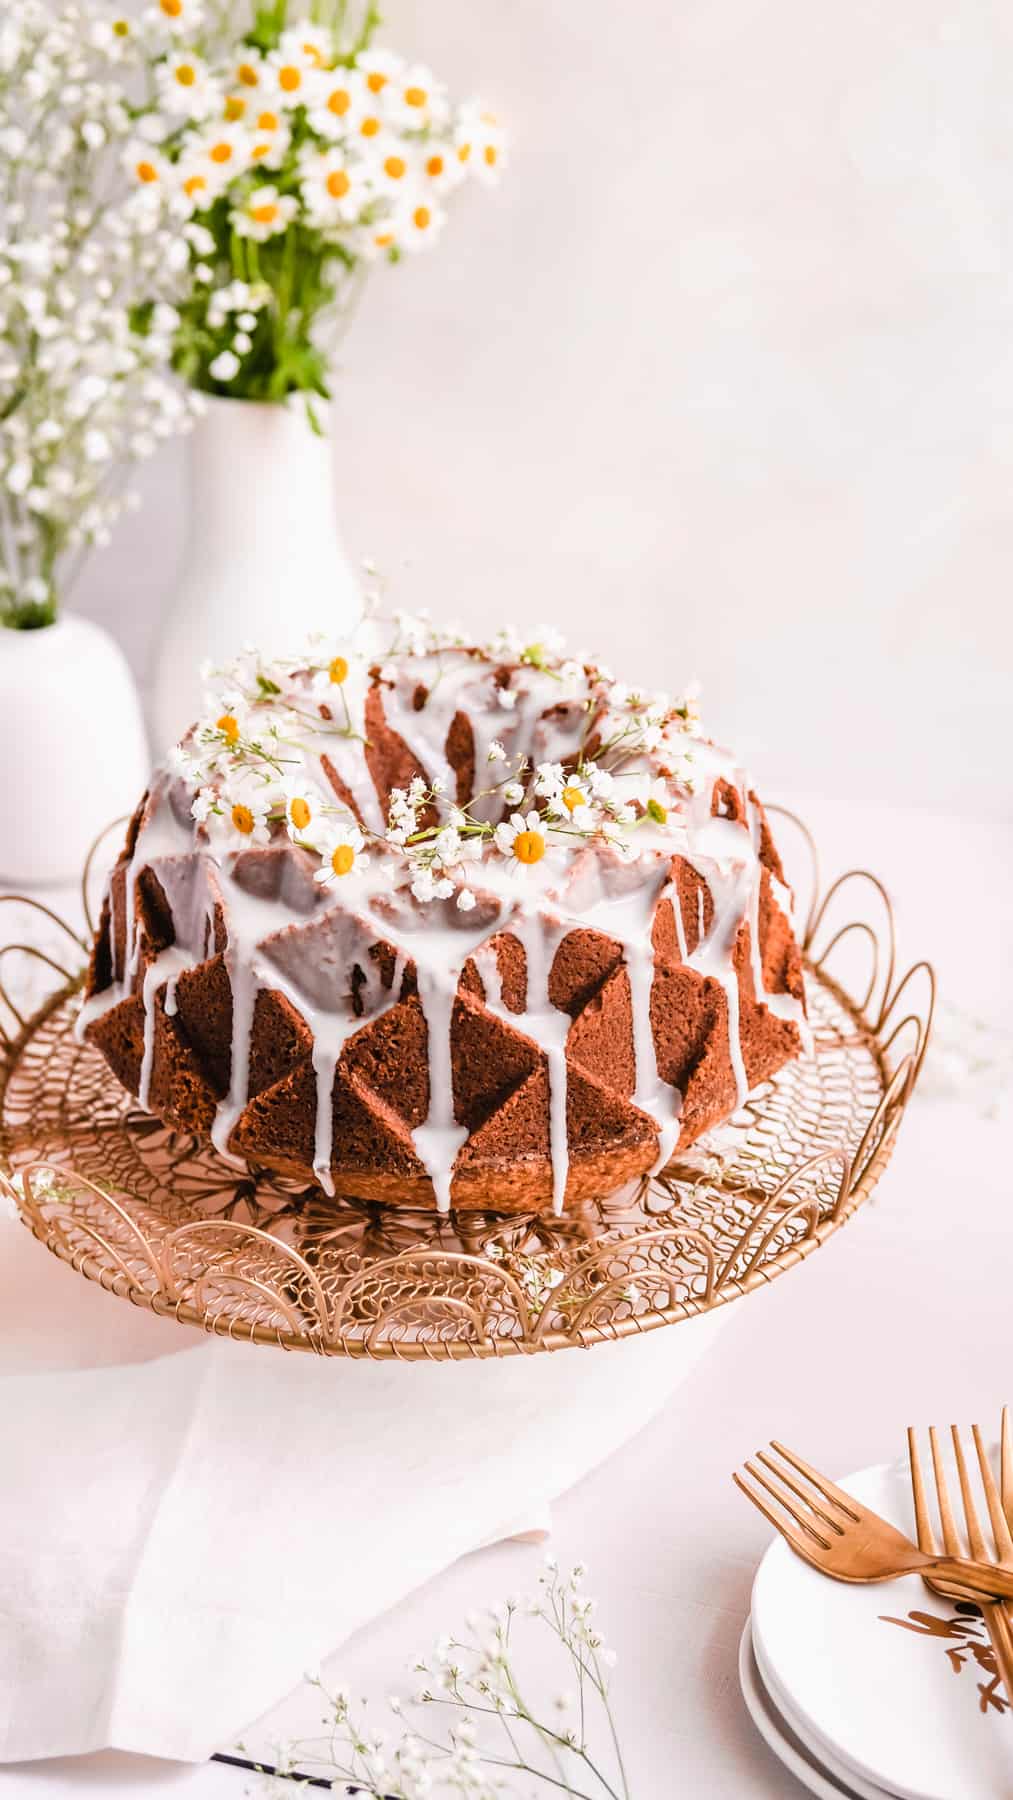 lemon bundt cake with lemon glaze and fresh flowers on a gold cake plate